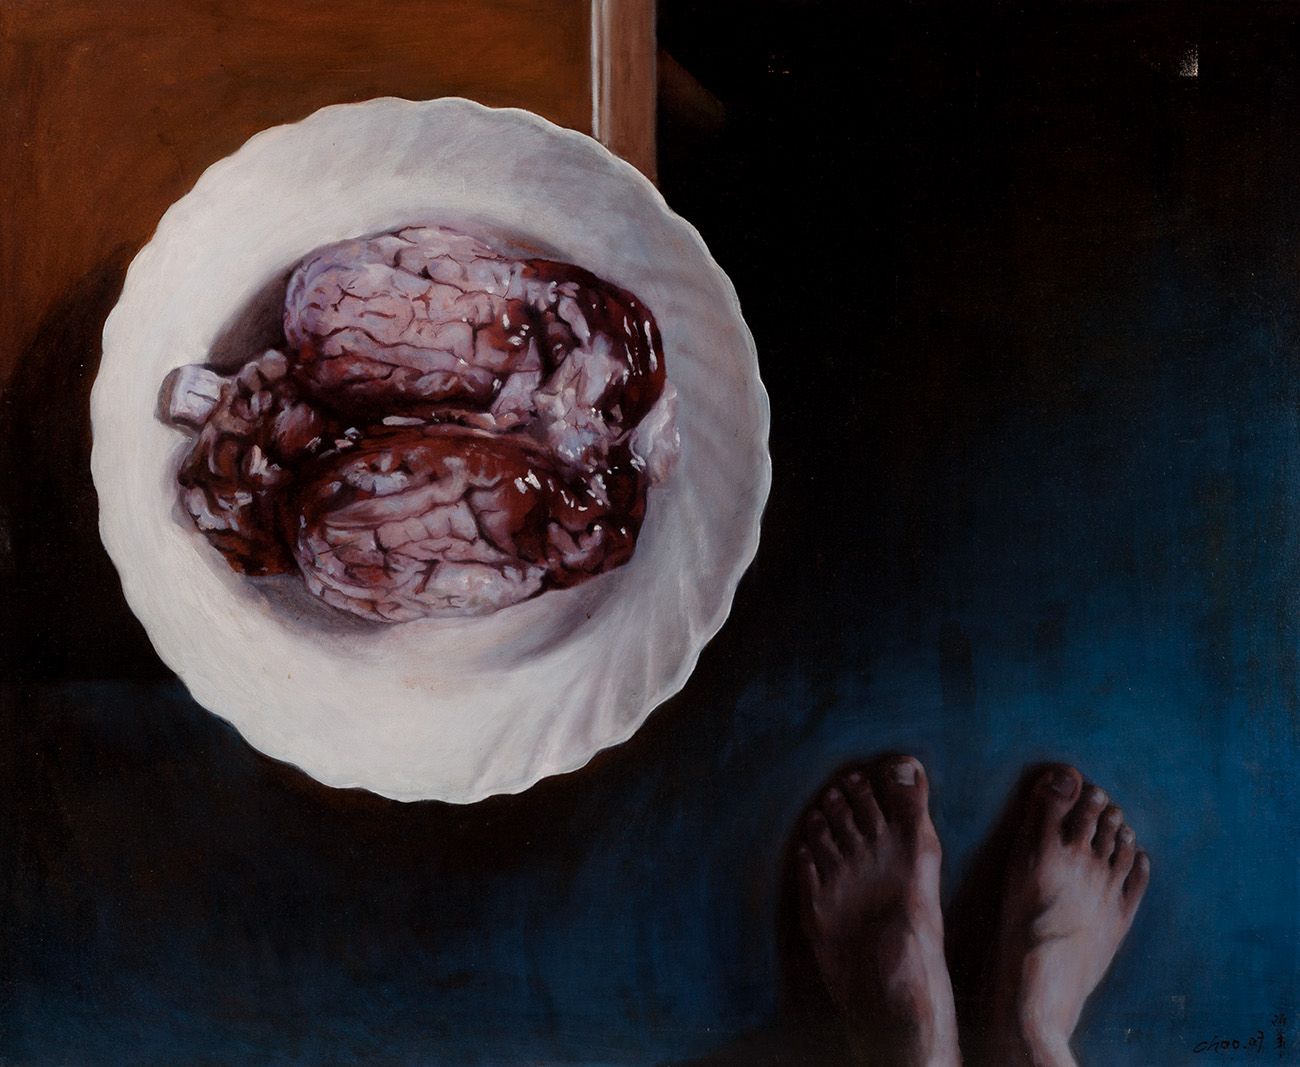 Null CHAO CHENG HUANG (Taiwán, 1977)
"El cerebro", 2007.
Óleo sobre lienzo.
Firm&hellip;